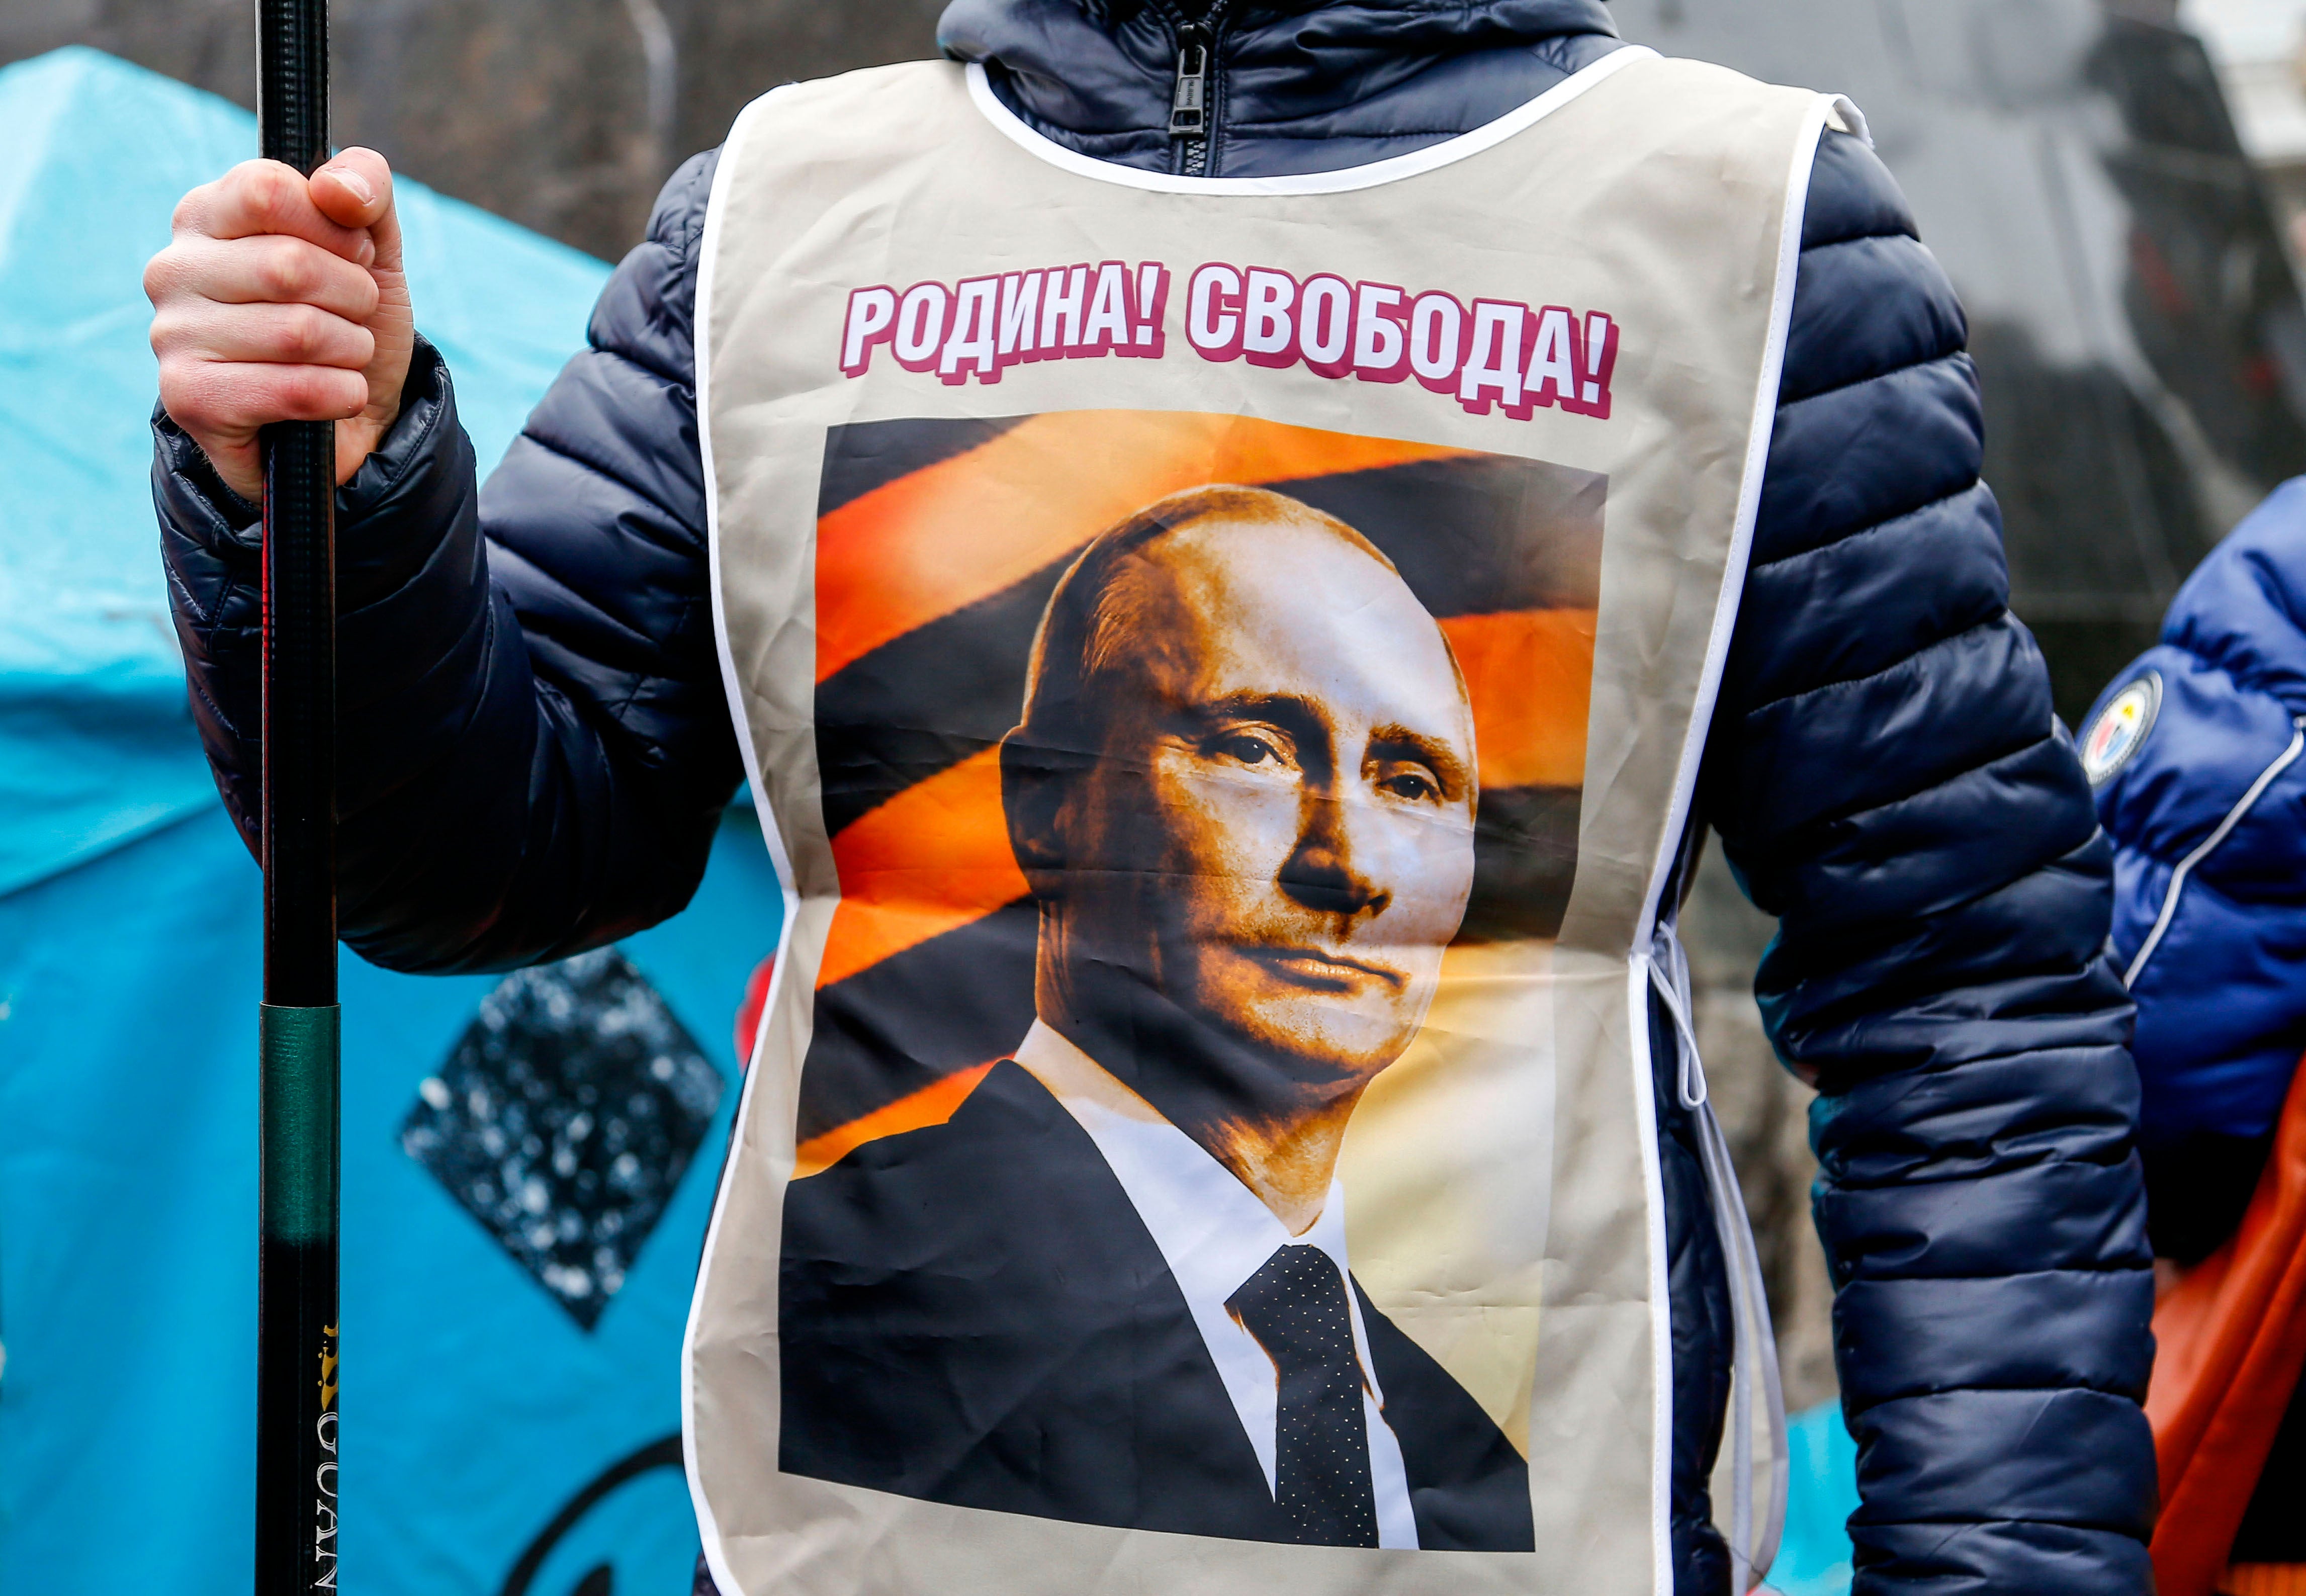 Analysis Ukraine Tensions Putin Speech